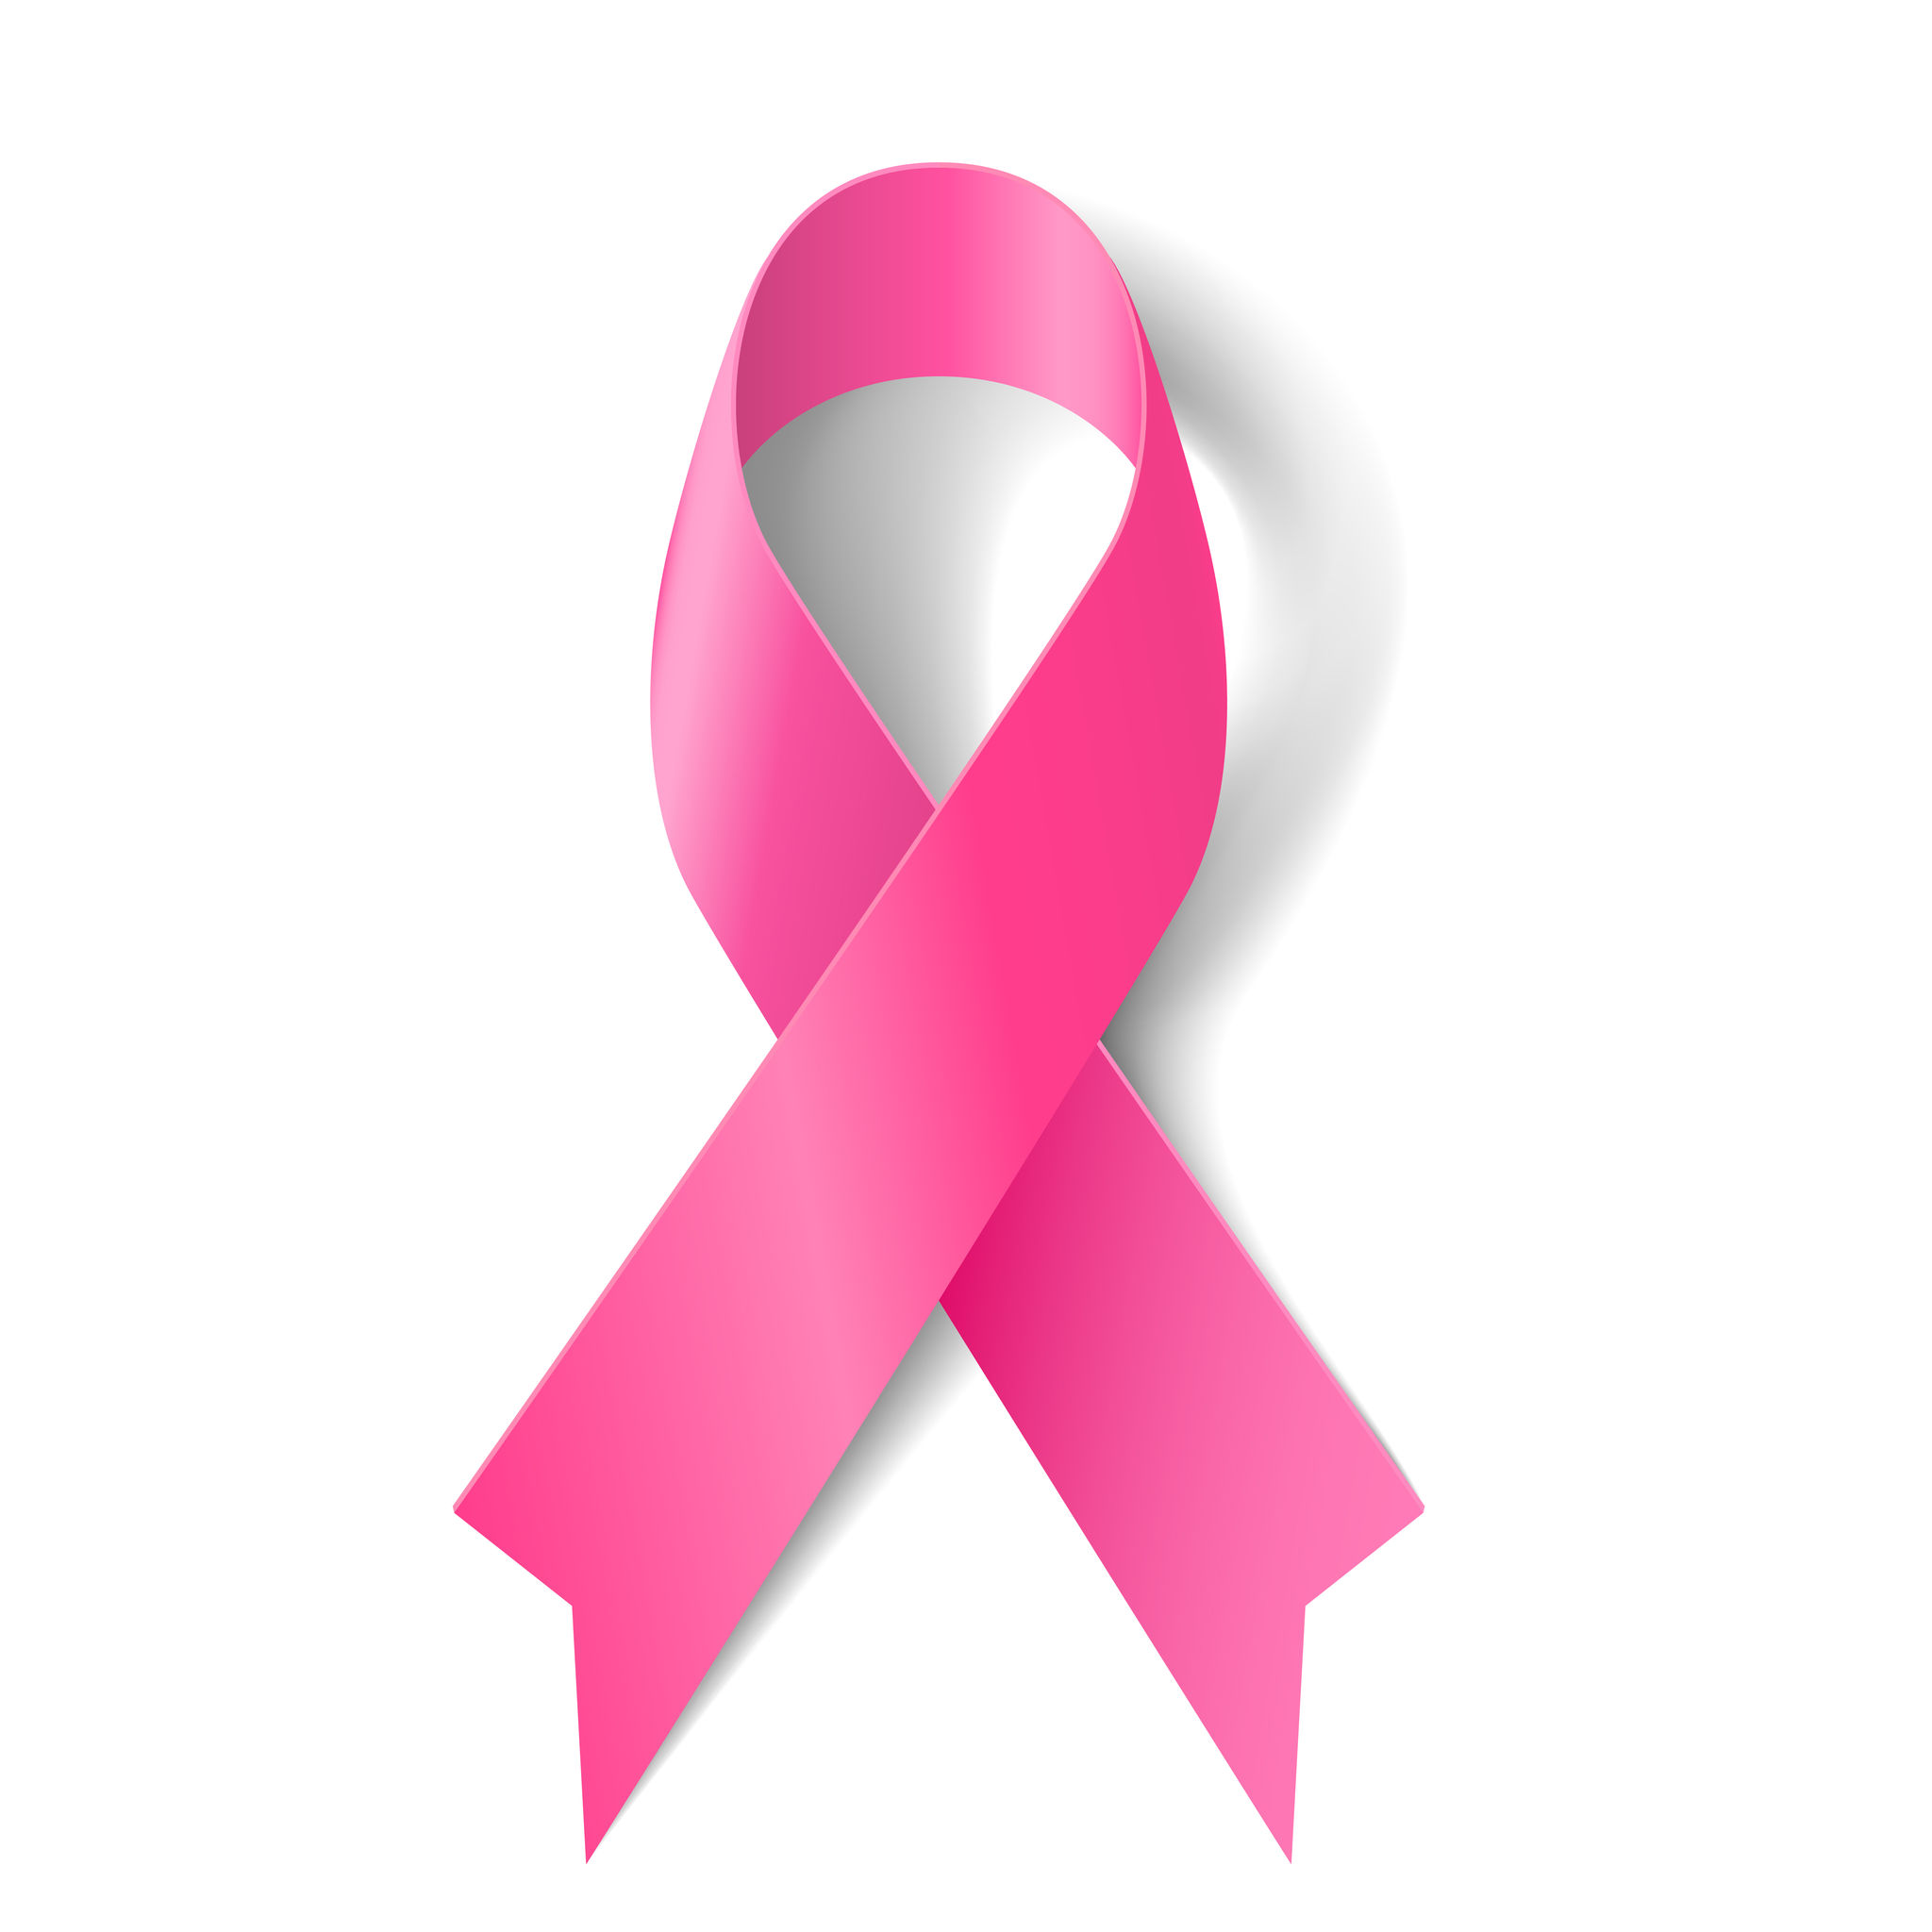 Details 48 logo de la lucha contra el cancer de mama